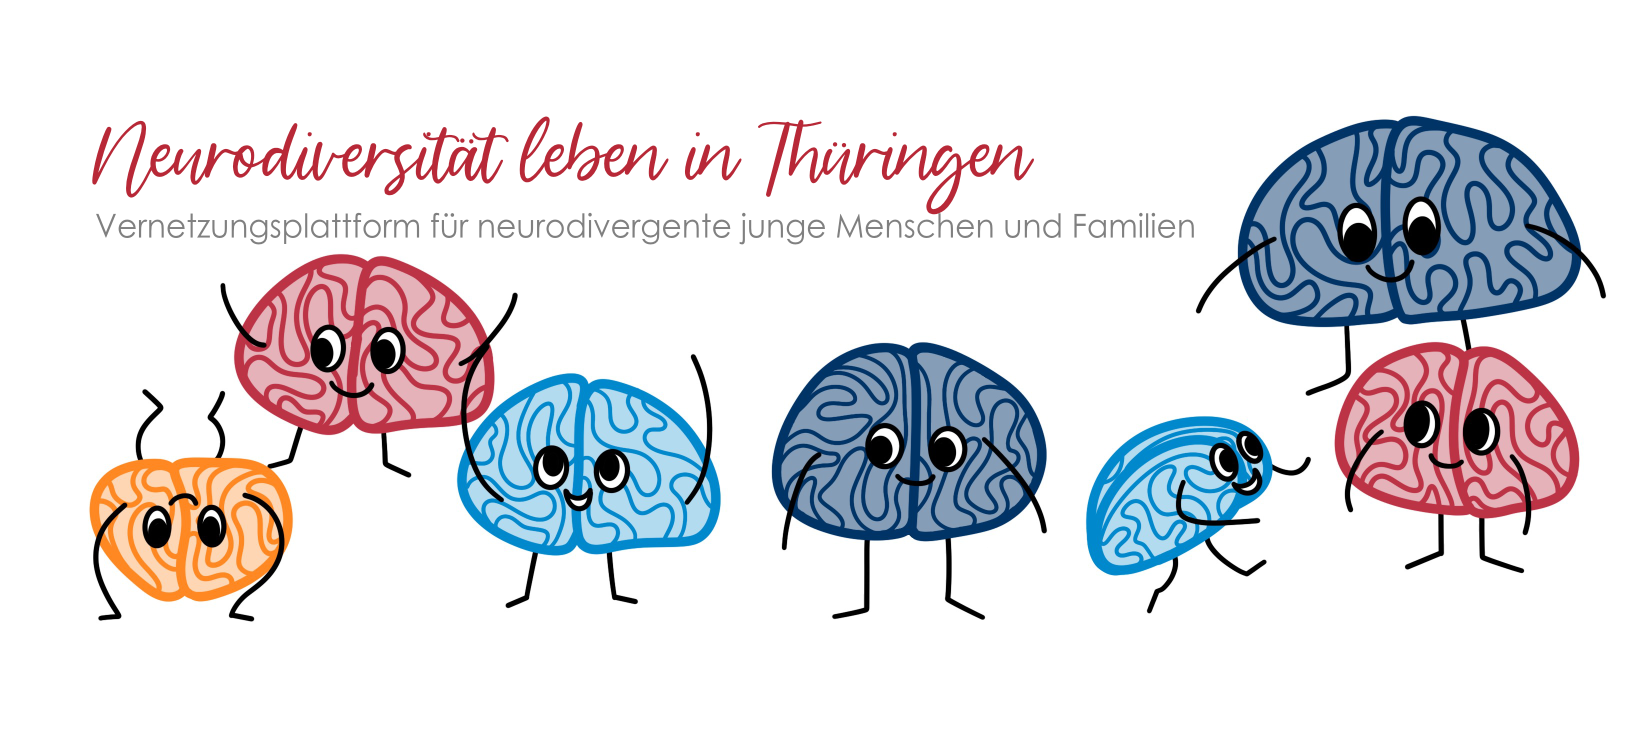 Facebook-Gruppe "Neurodiversität leben in Thüringen"